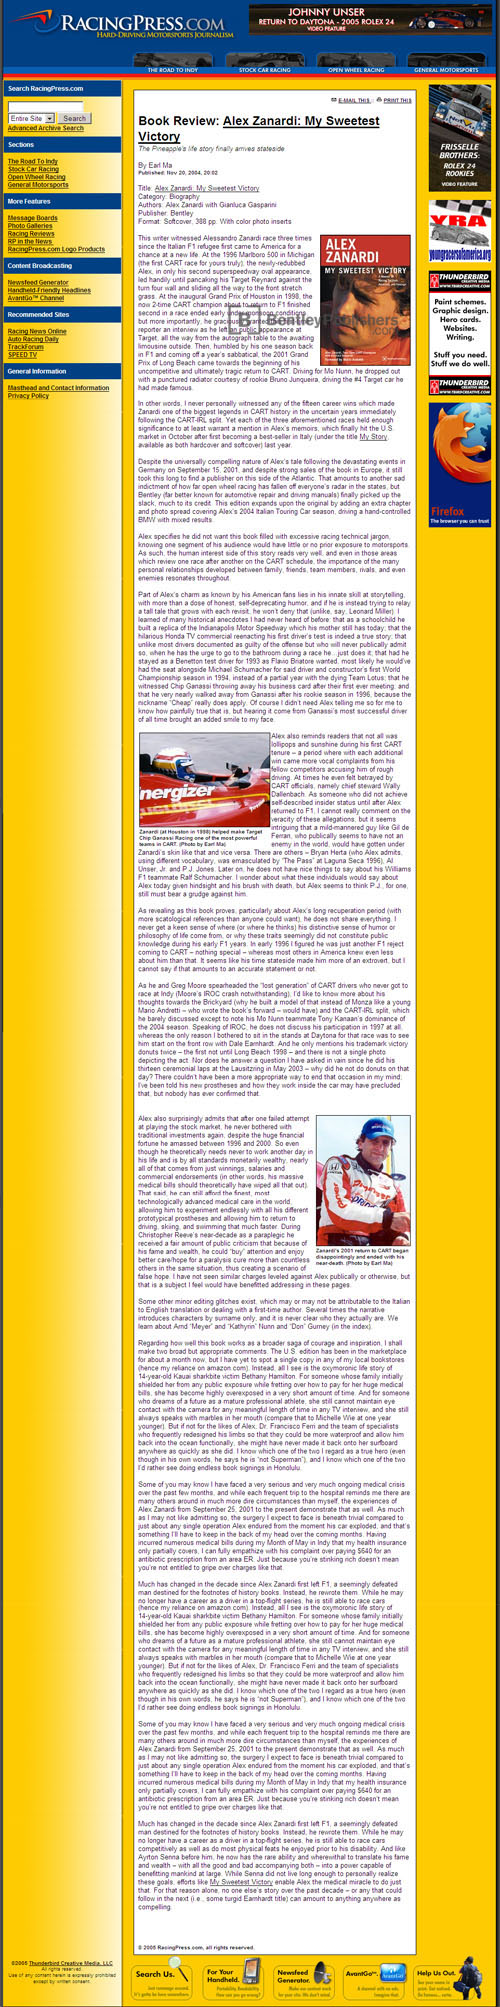 RacingPress.com review of Alex Zanardi